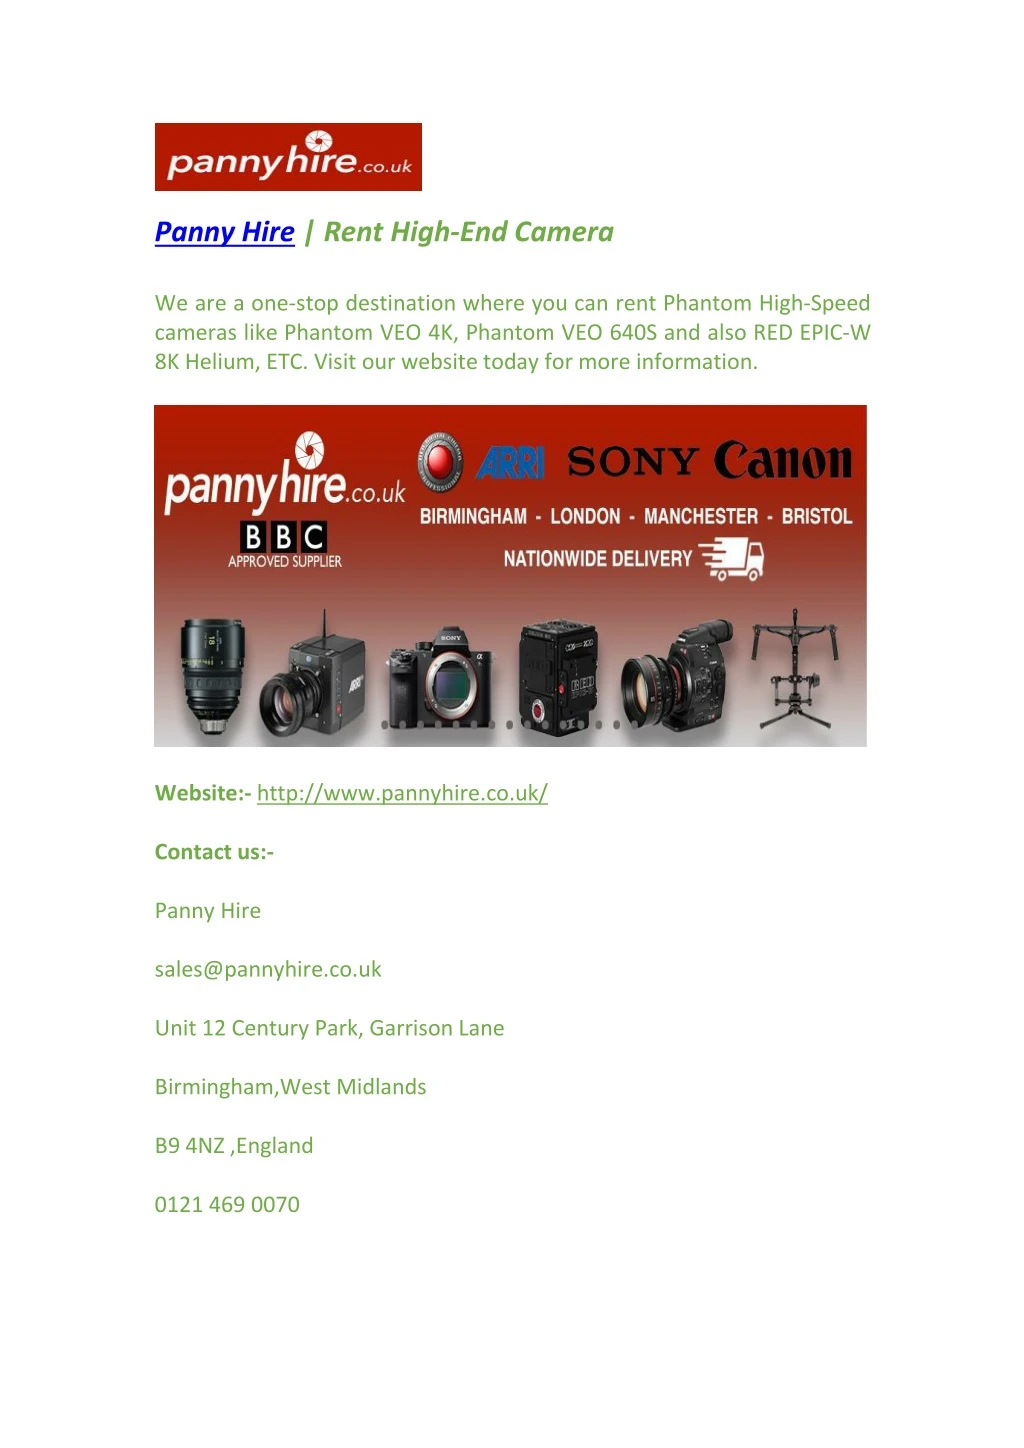 panny hire rent high end camera